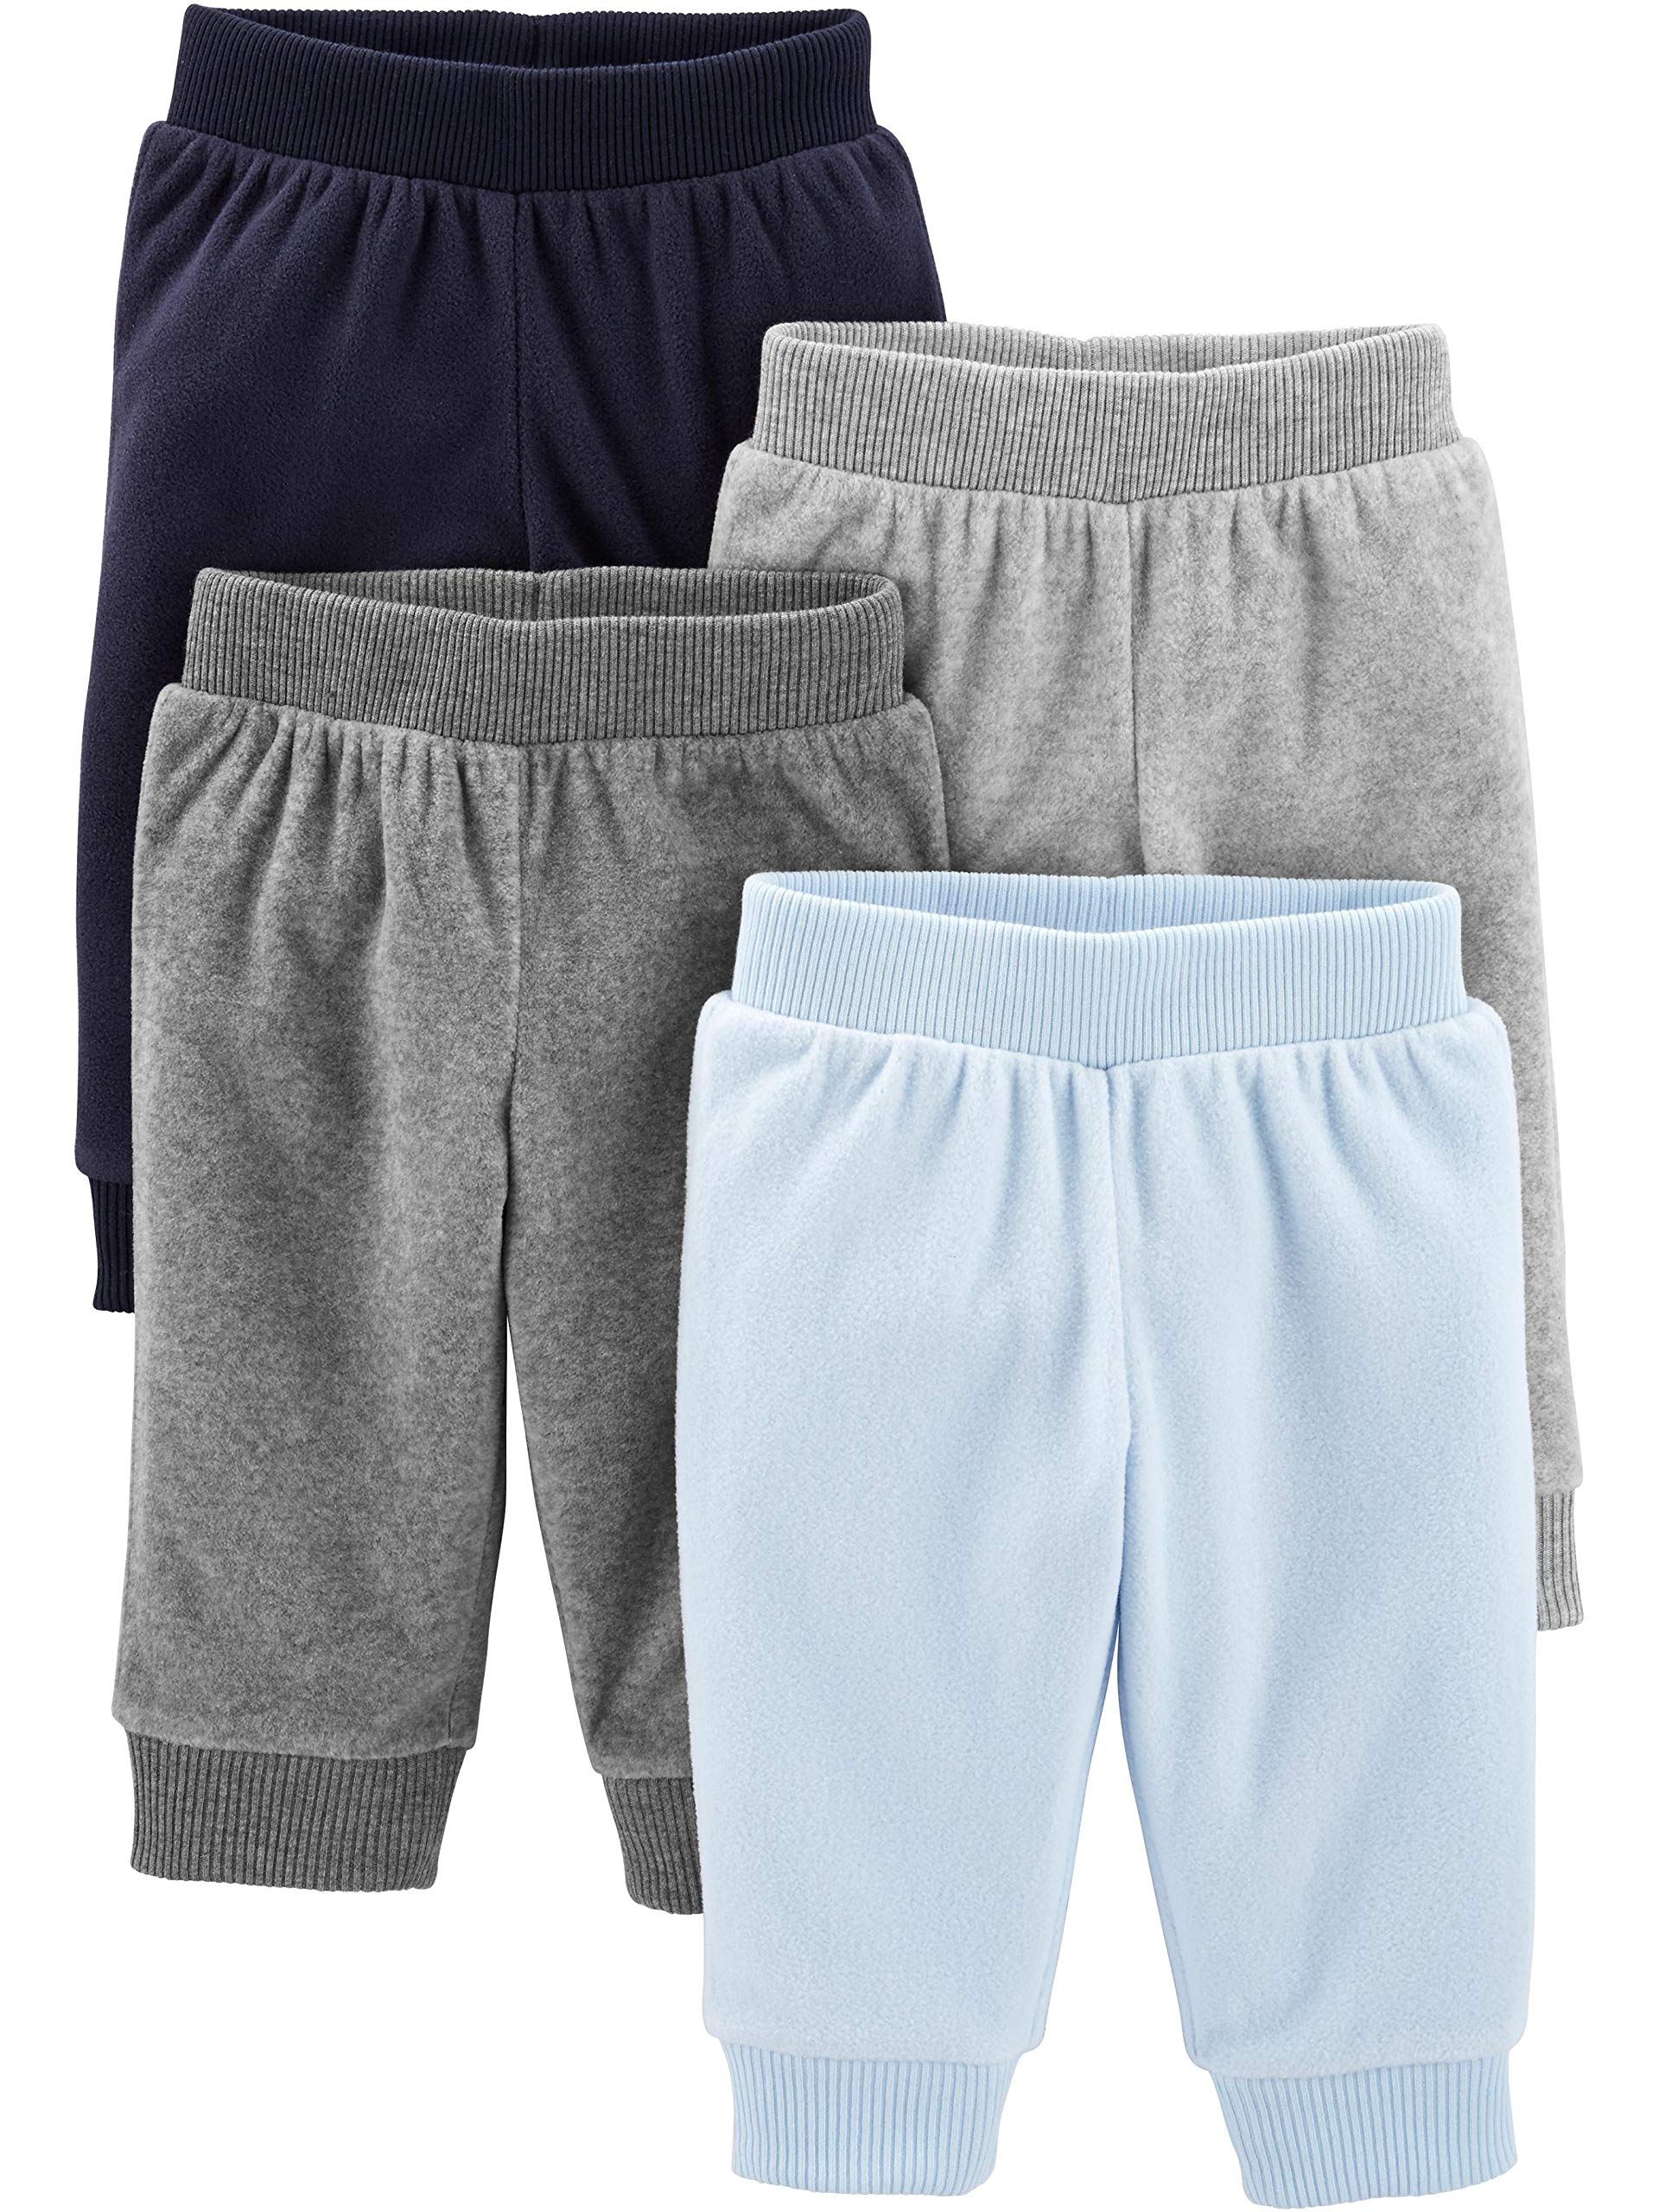 Simple Joys by Carter's Unisex Babies' Fleece Pants, Pack of 4, Dark Grey/Grey Heather/Light Blue/Navy, 0-3 Months